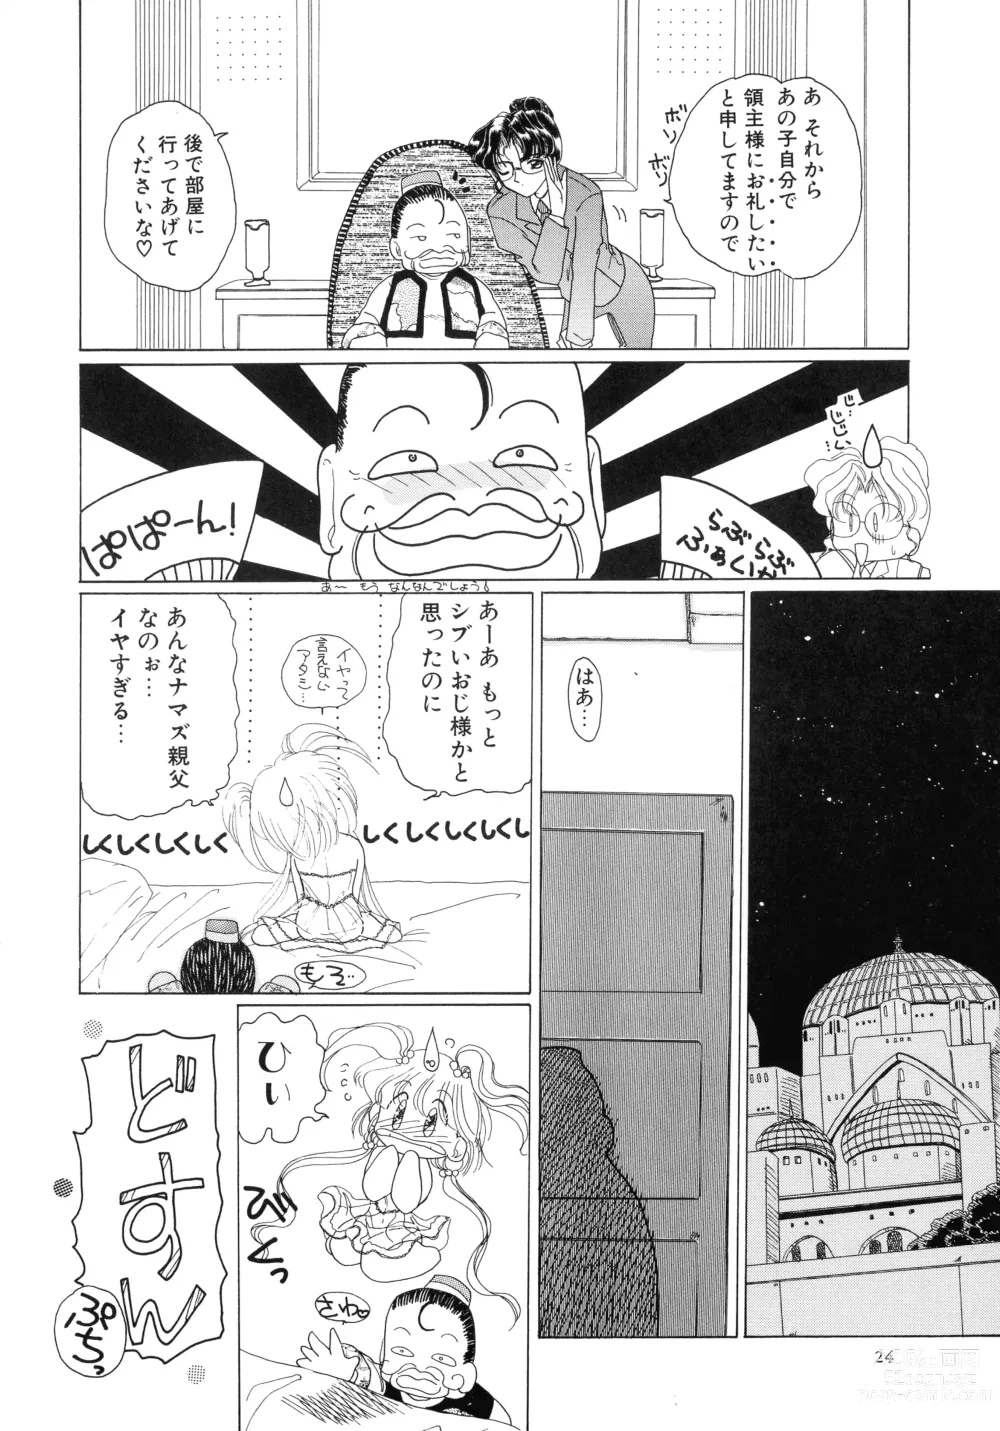 Page 23 of manga Mahou Trouble